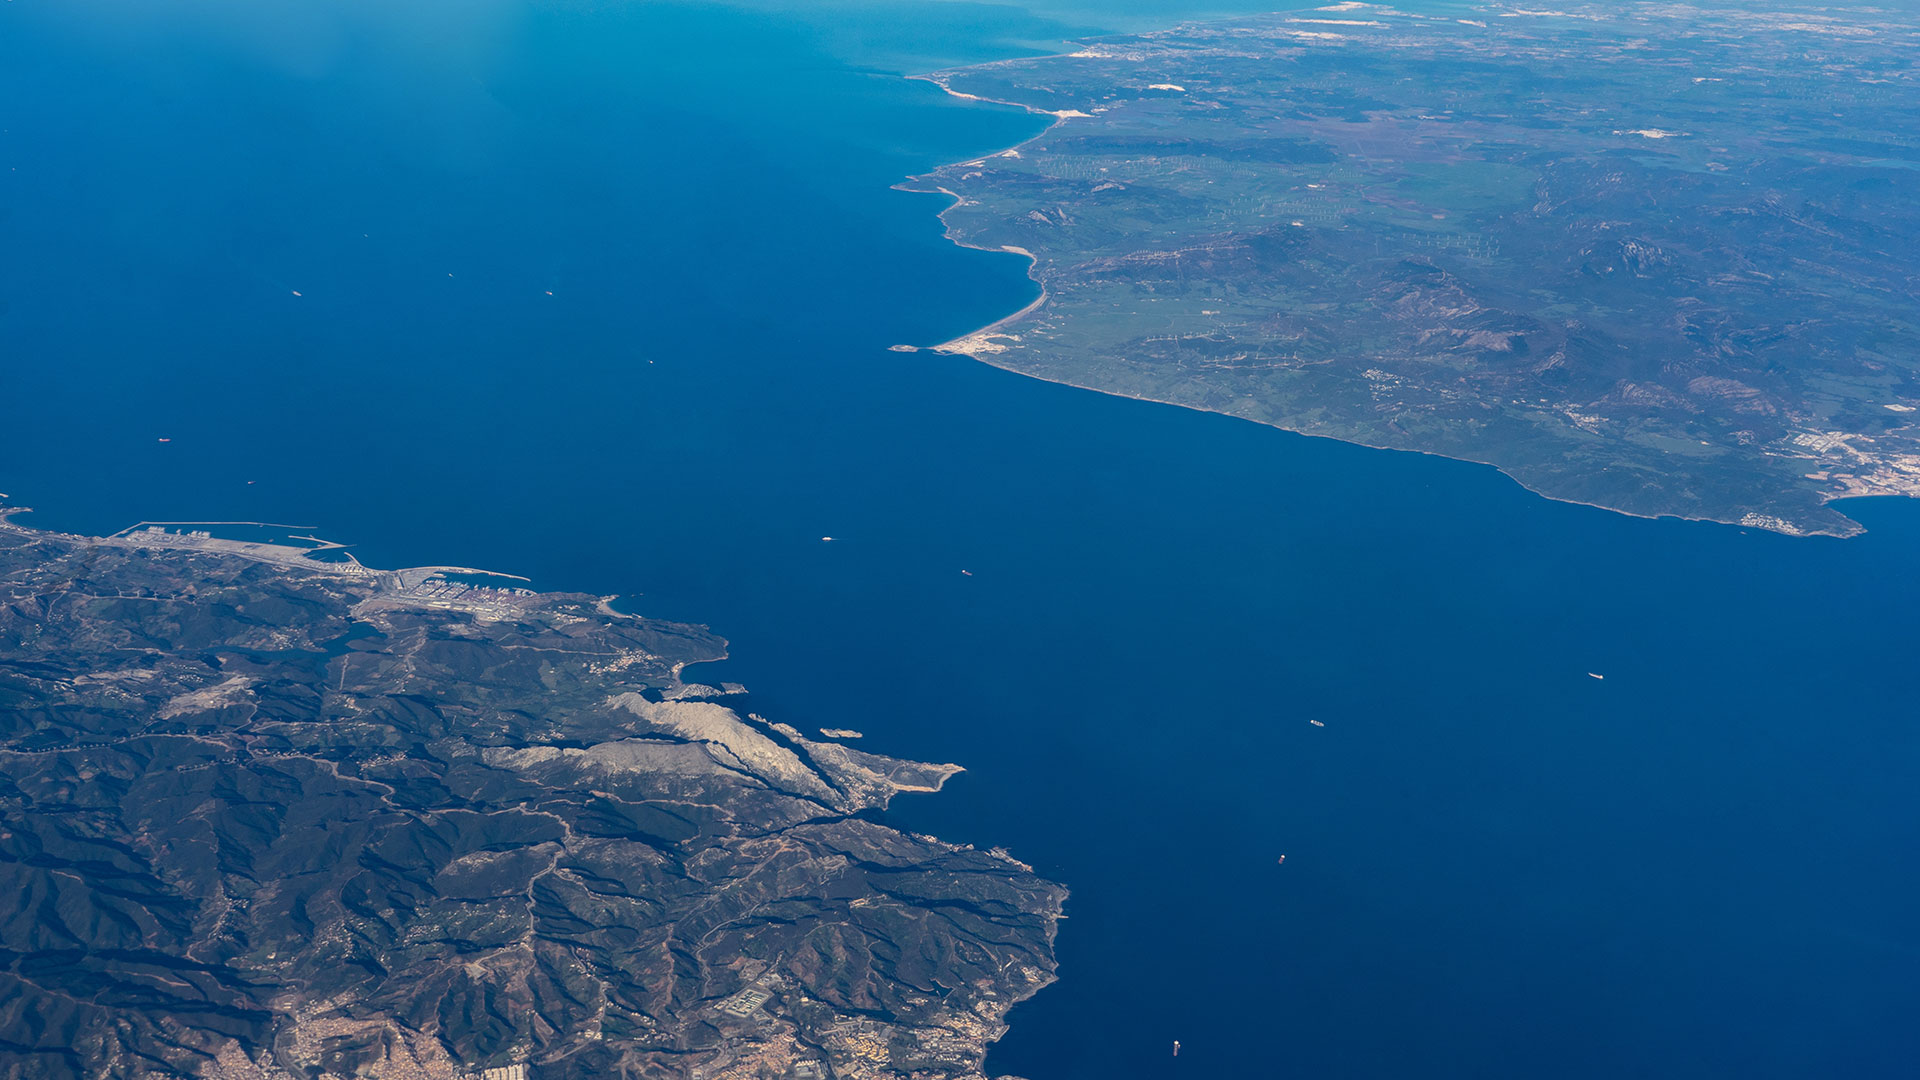 The Strait of Gibraltar Natural Park